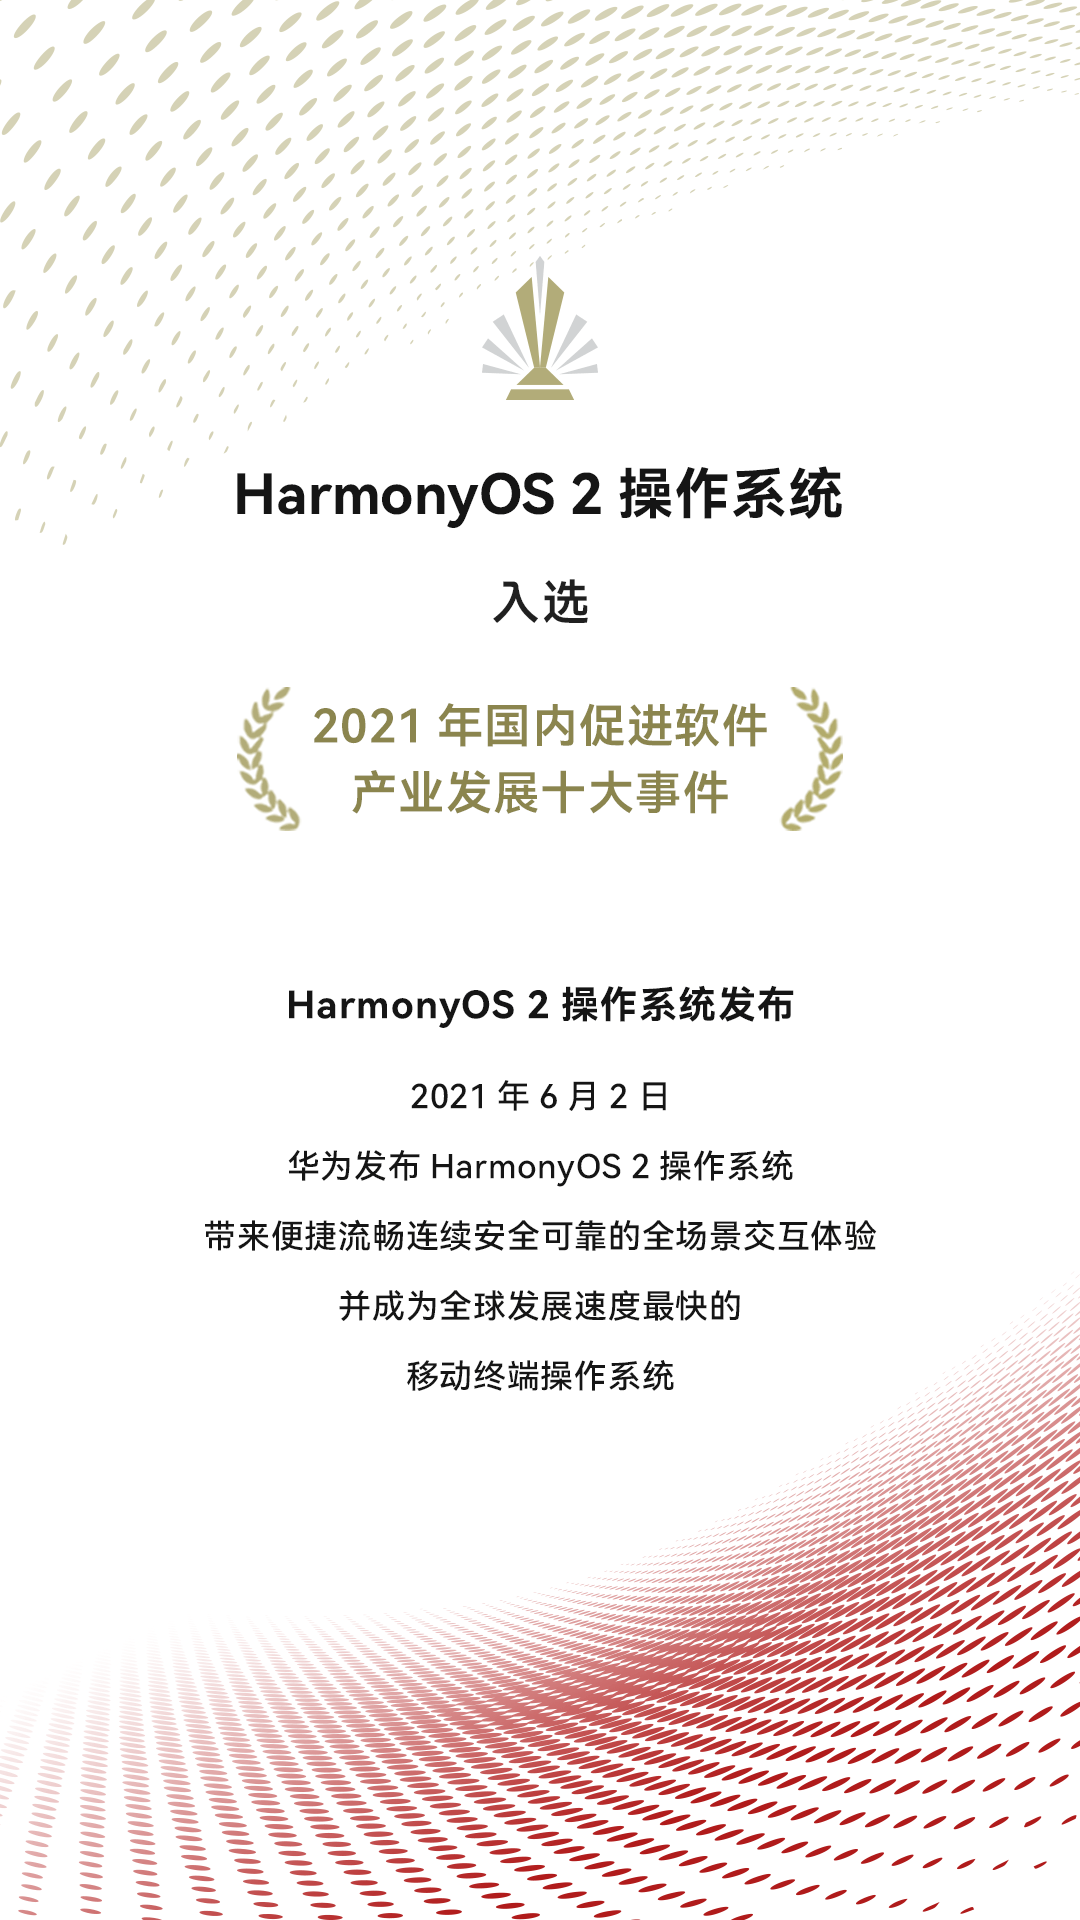 HarmonyOS 2成全球发展最快移动系统，入选2021软件产业十大事件